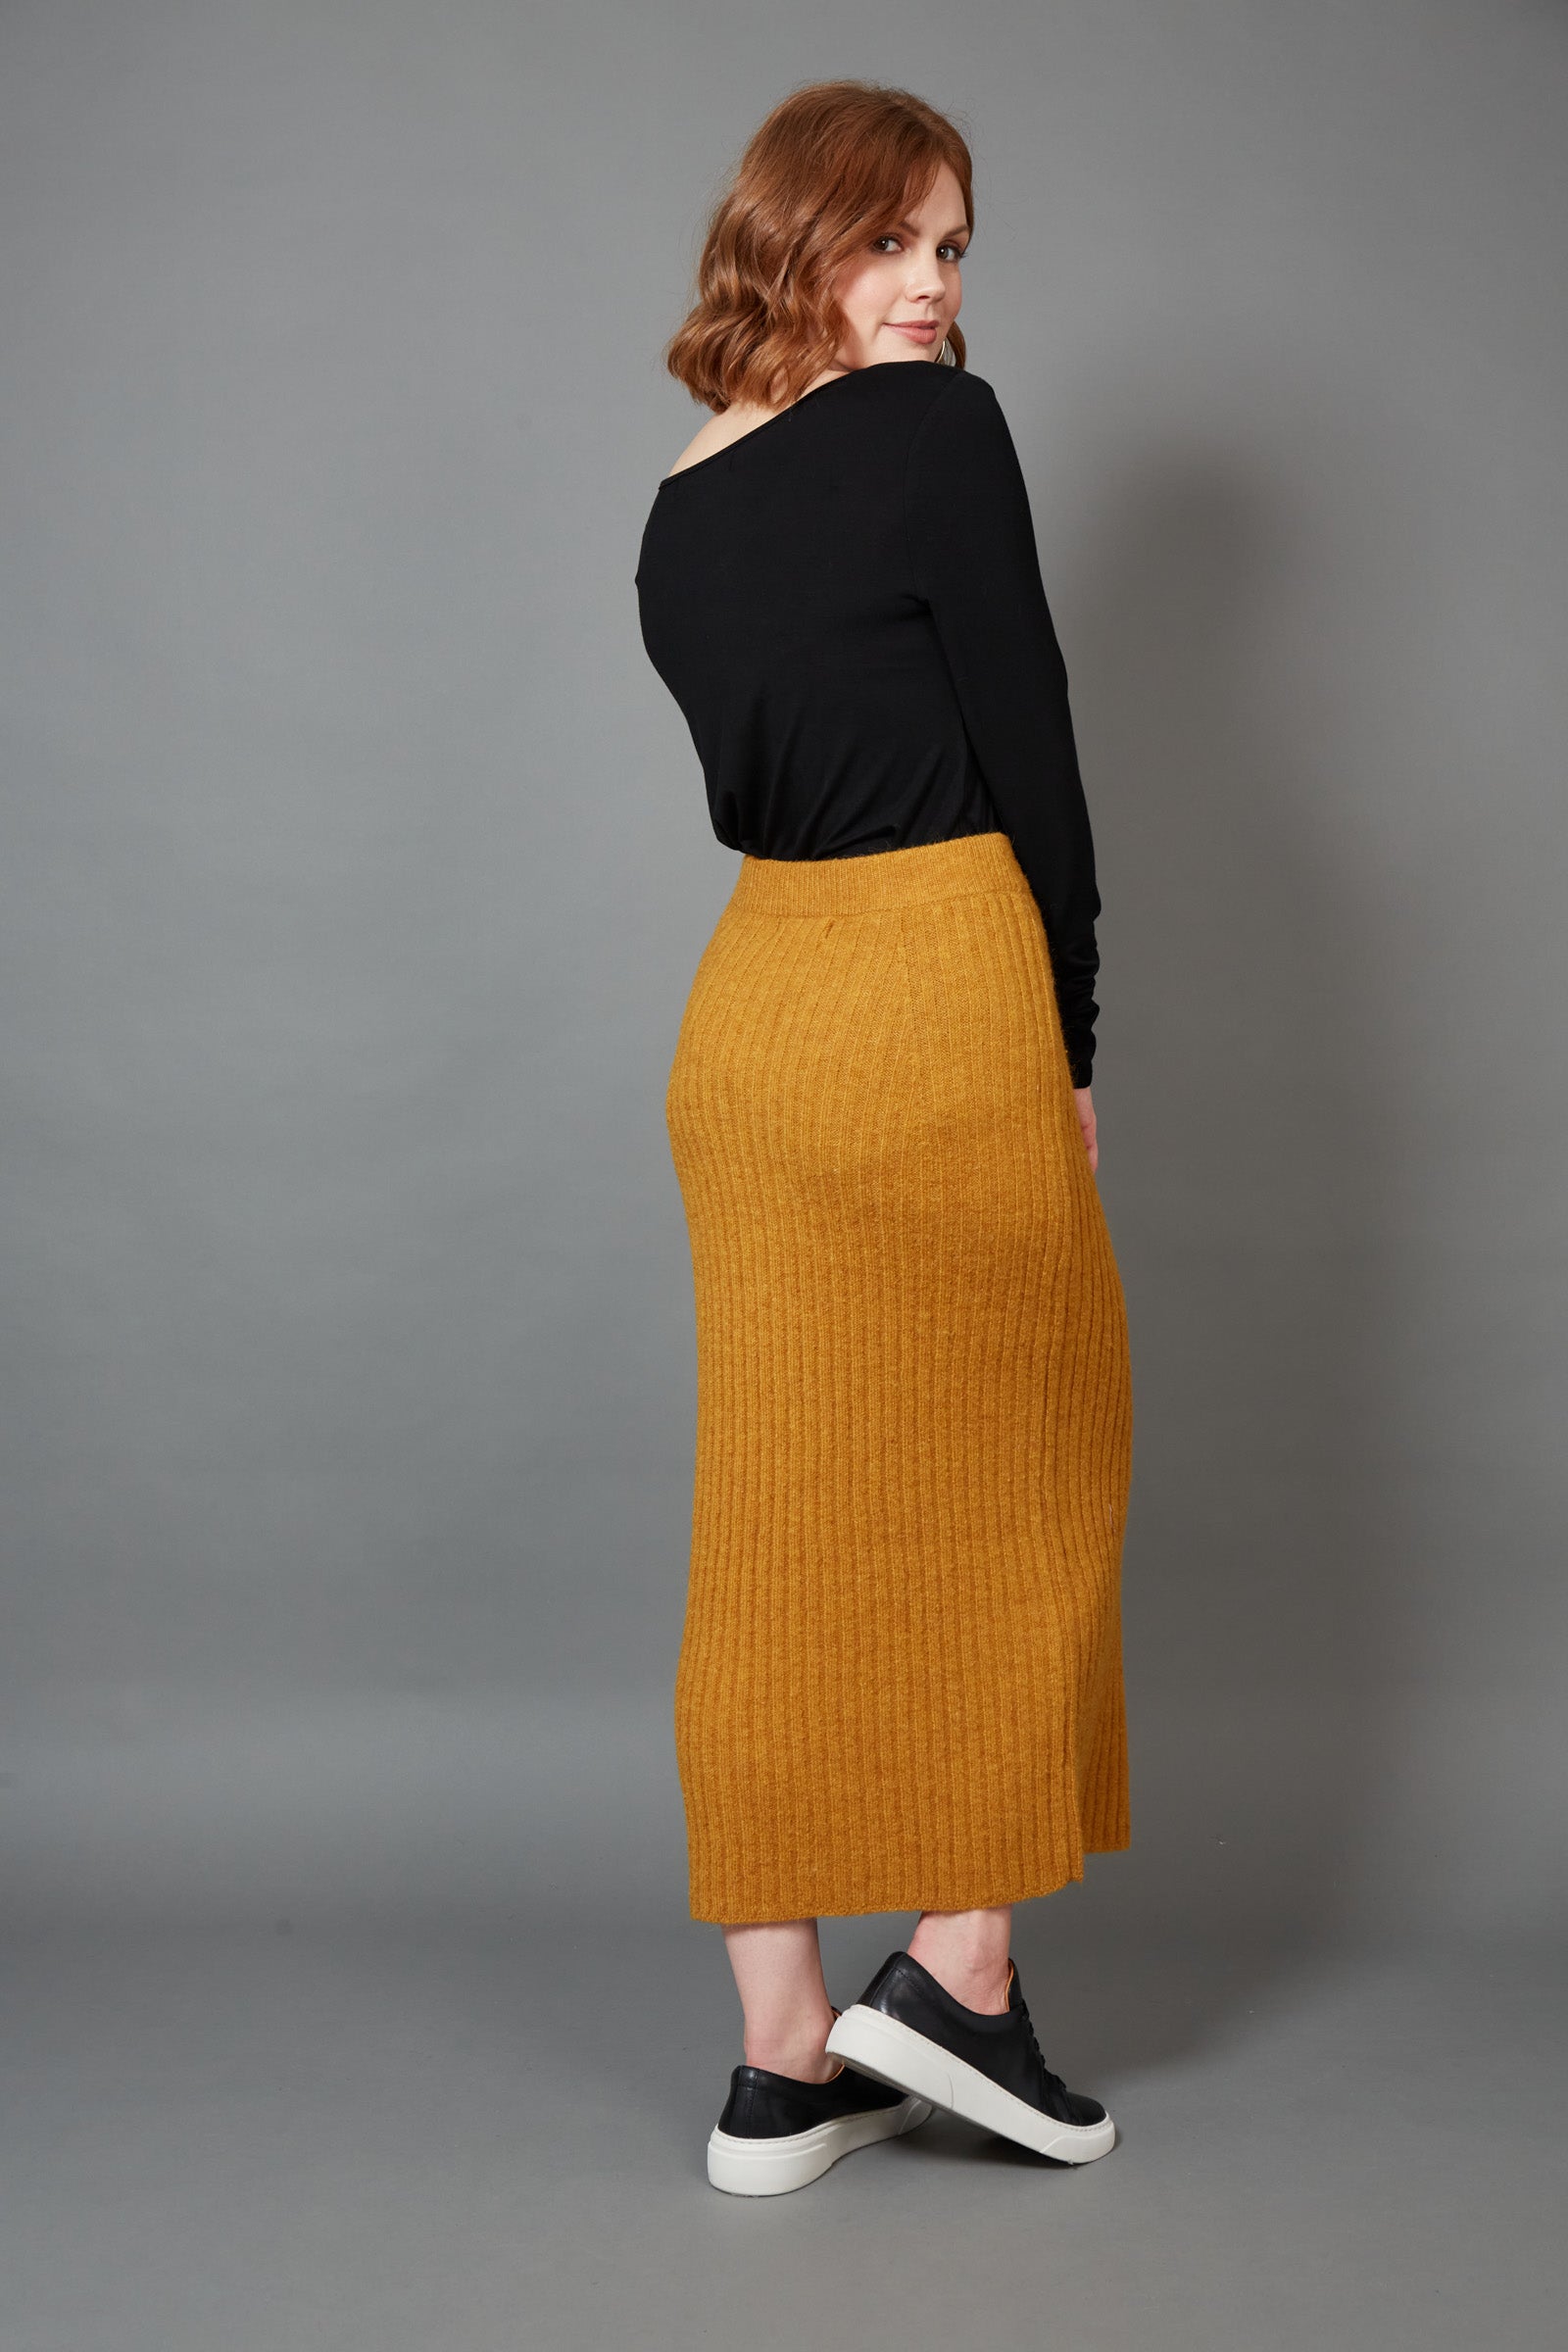 Kinsella Knit Skirts - EB&IVE